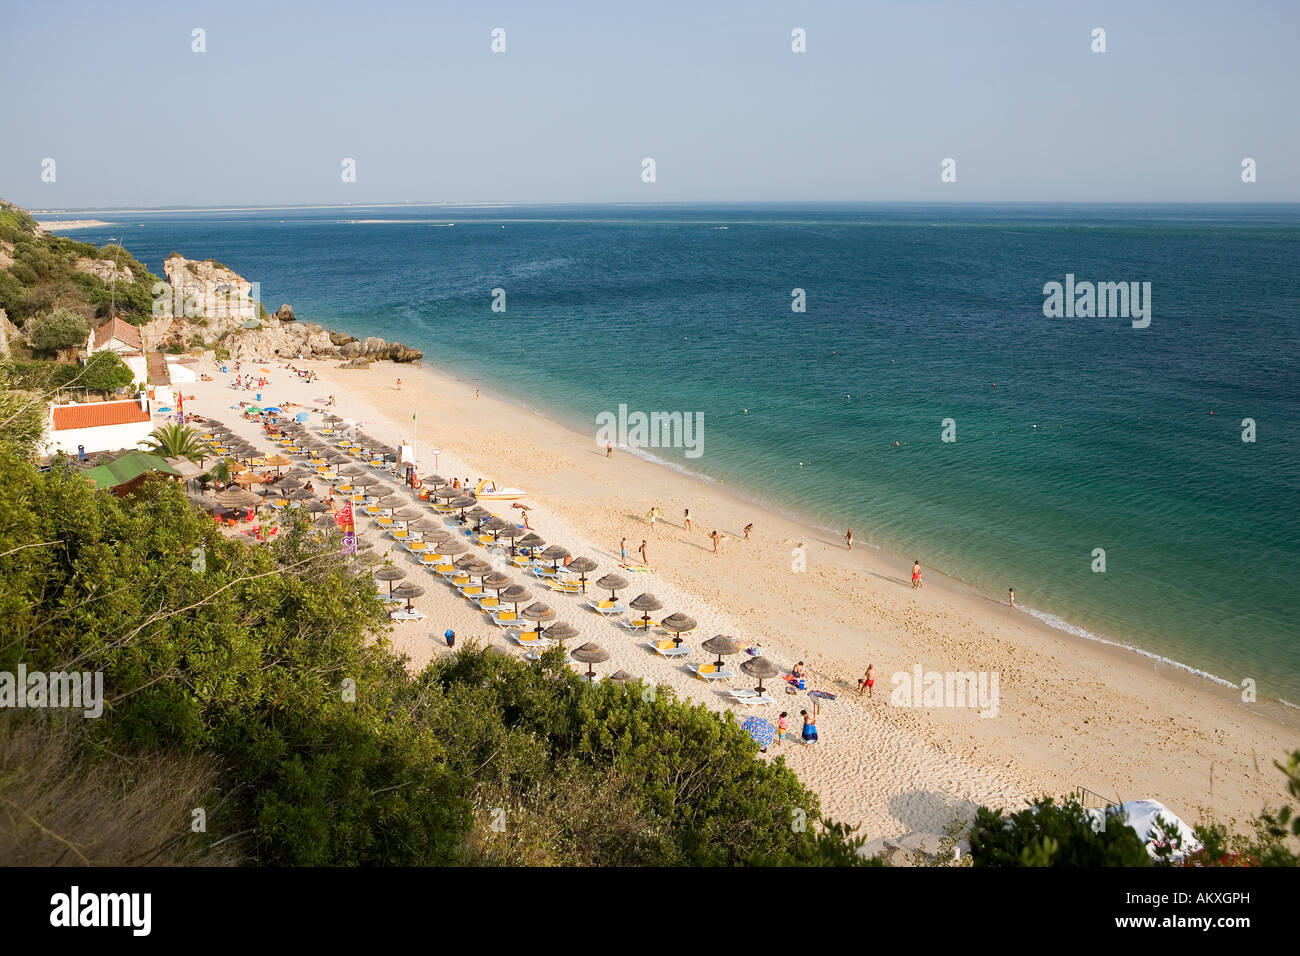 Praia de Galapos Beach, Costa Azul, près de Sesimbra, Portugal, en fin d'après-midi Banque D'Images